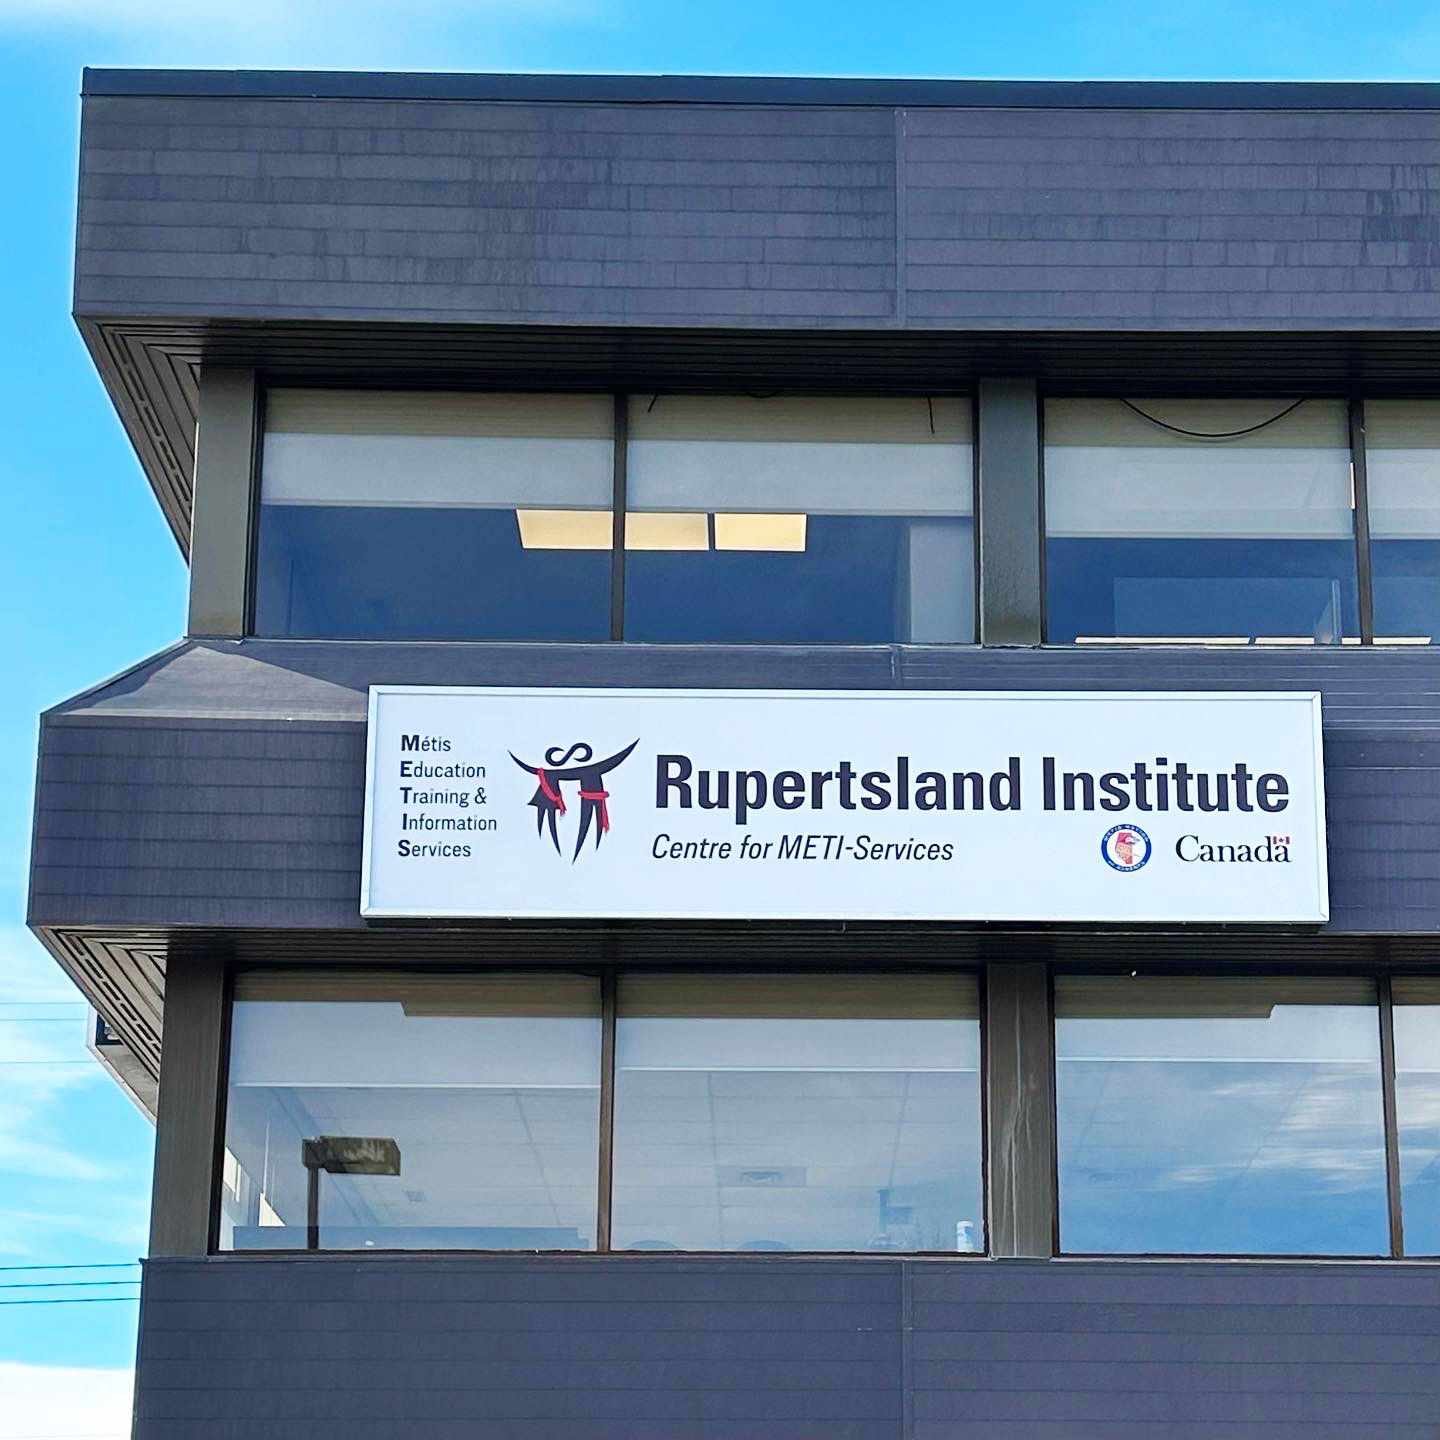 Commercial Business Sign for Rupertsland Institute